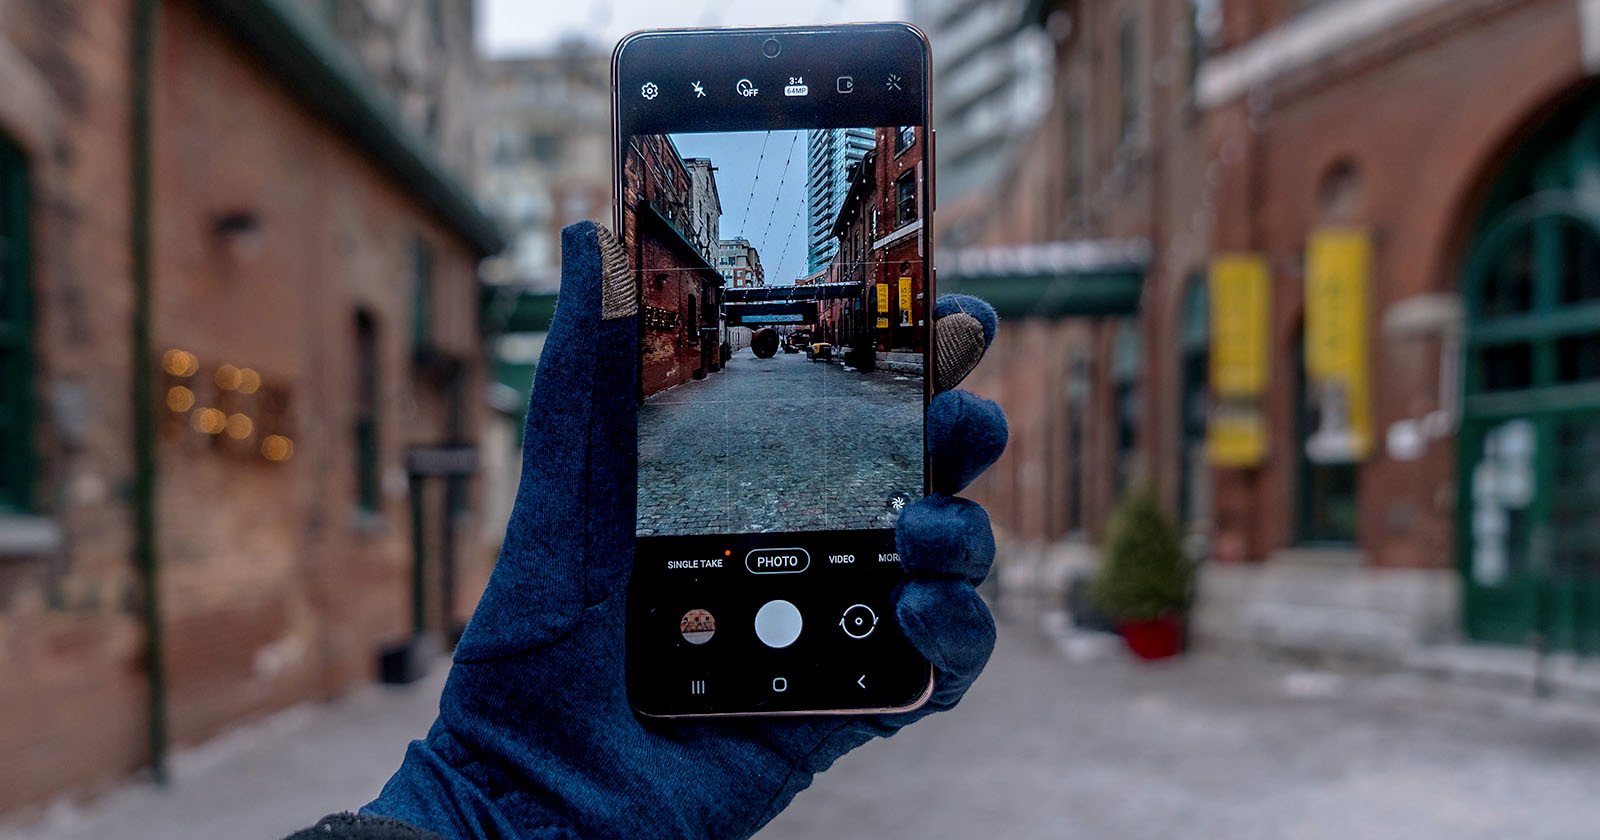 Samsungs Repair Mode Keeps Your Photos and Data Hidden from Techs